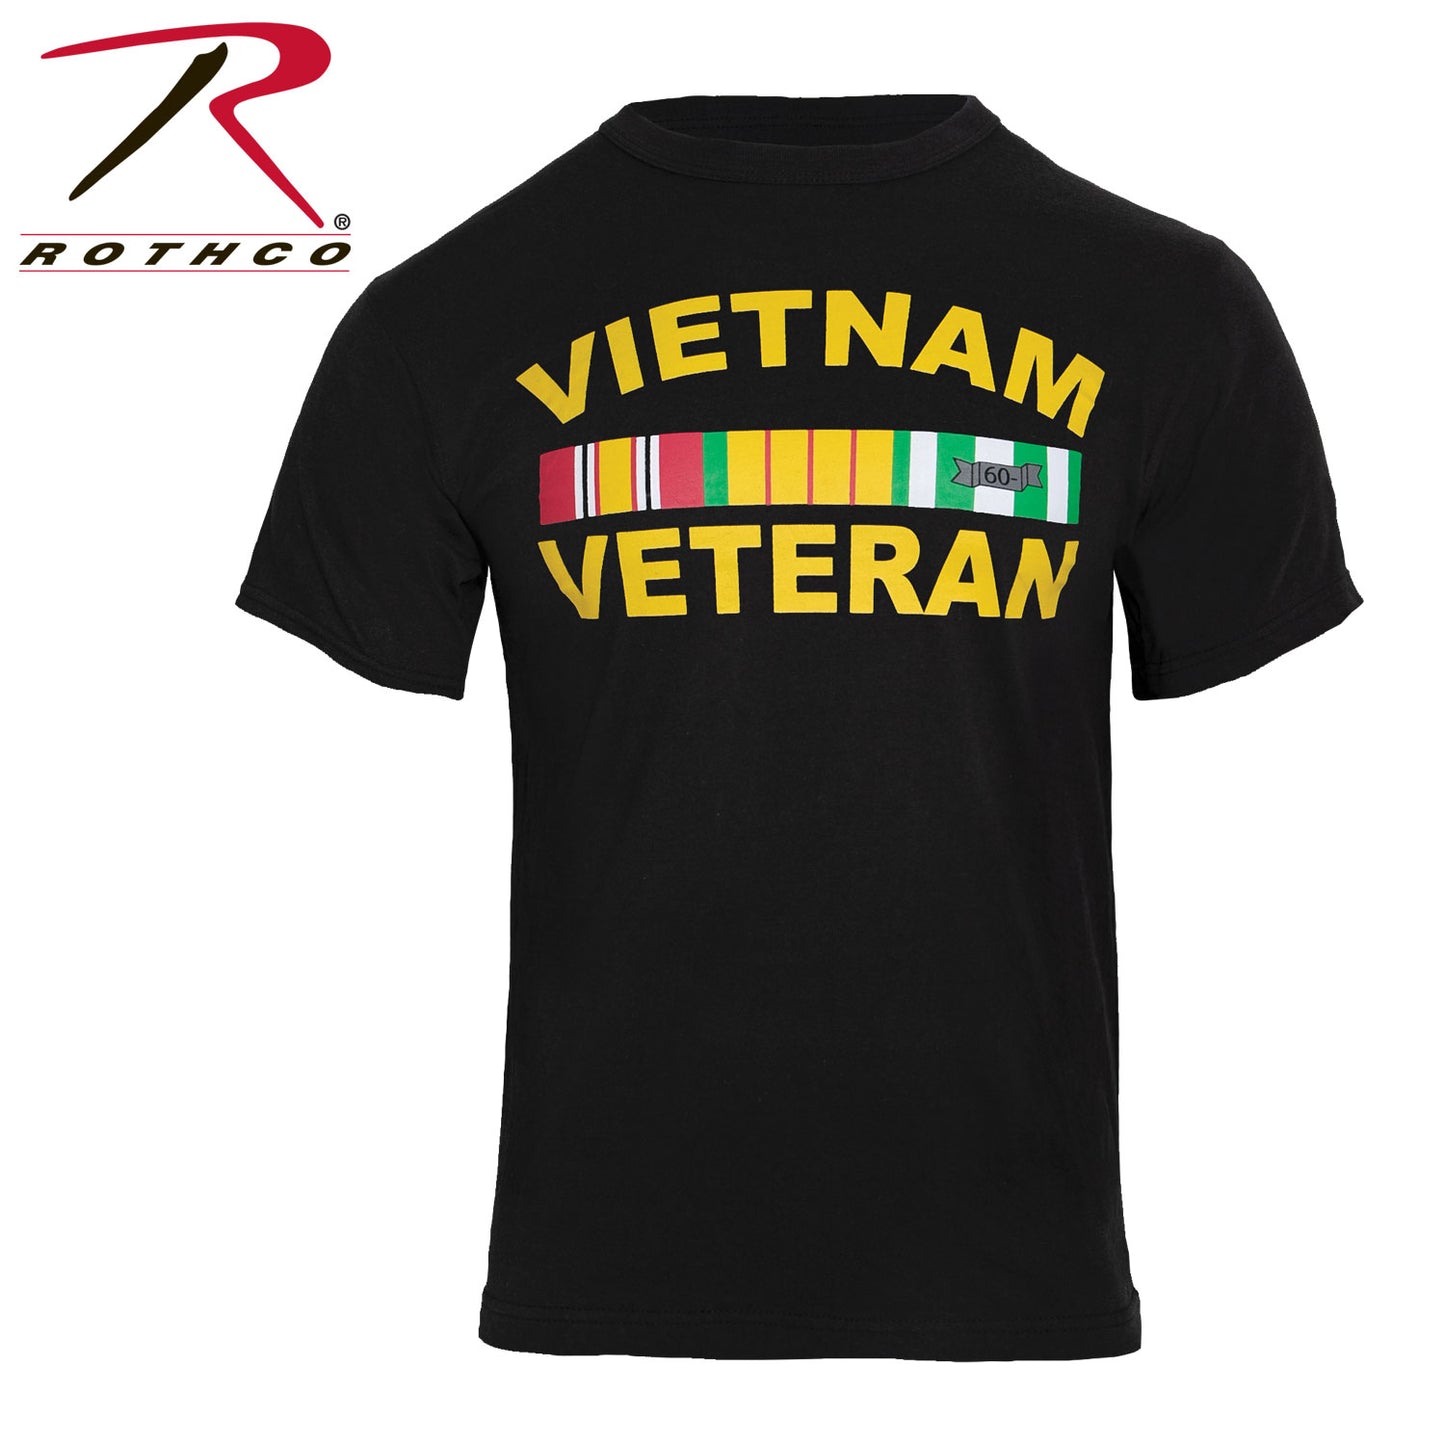 'Vietnam Veteran' T-Shirt